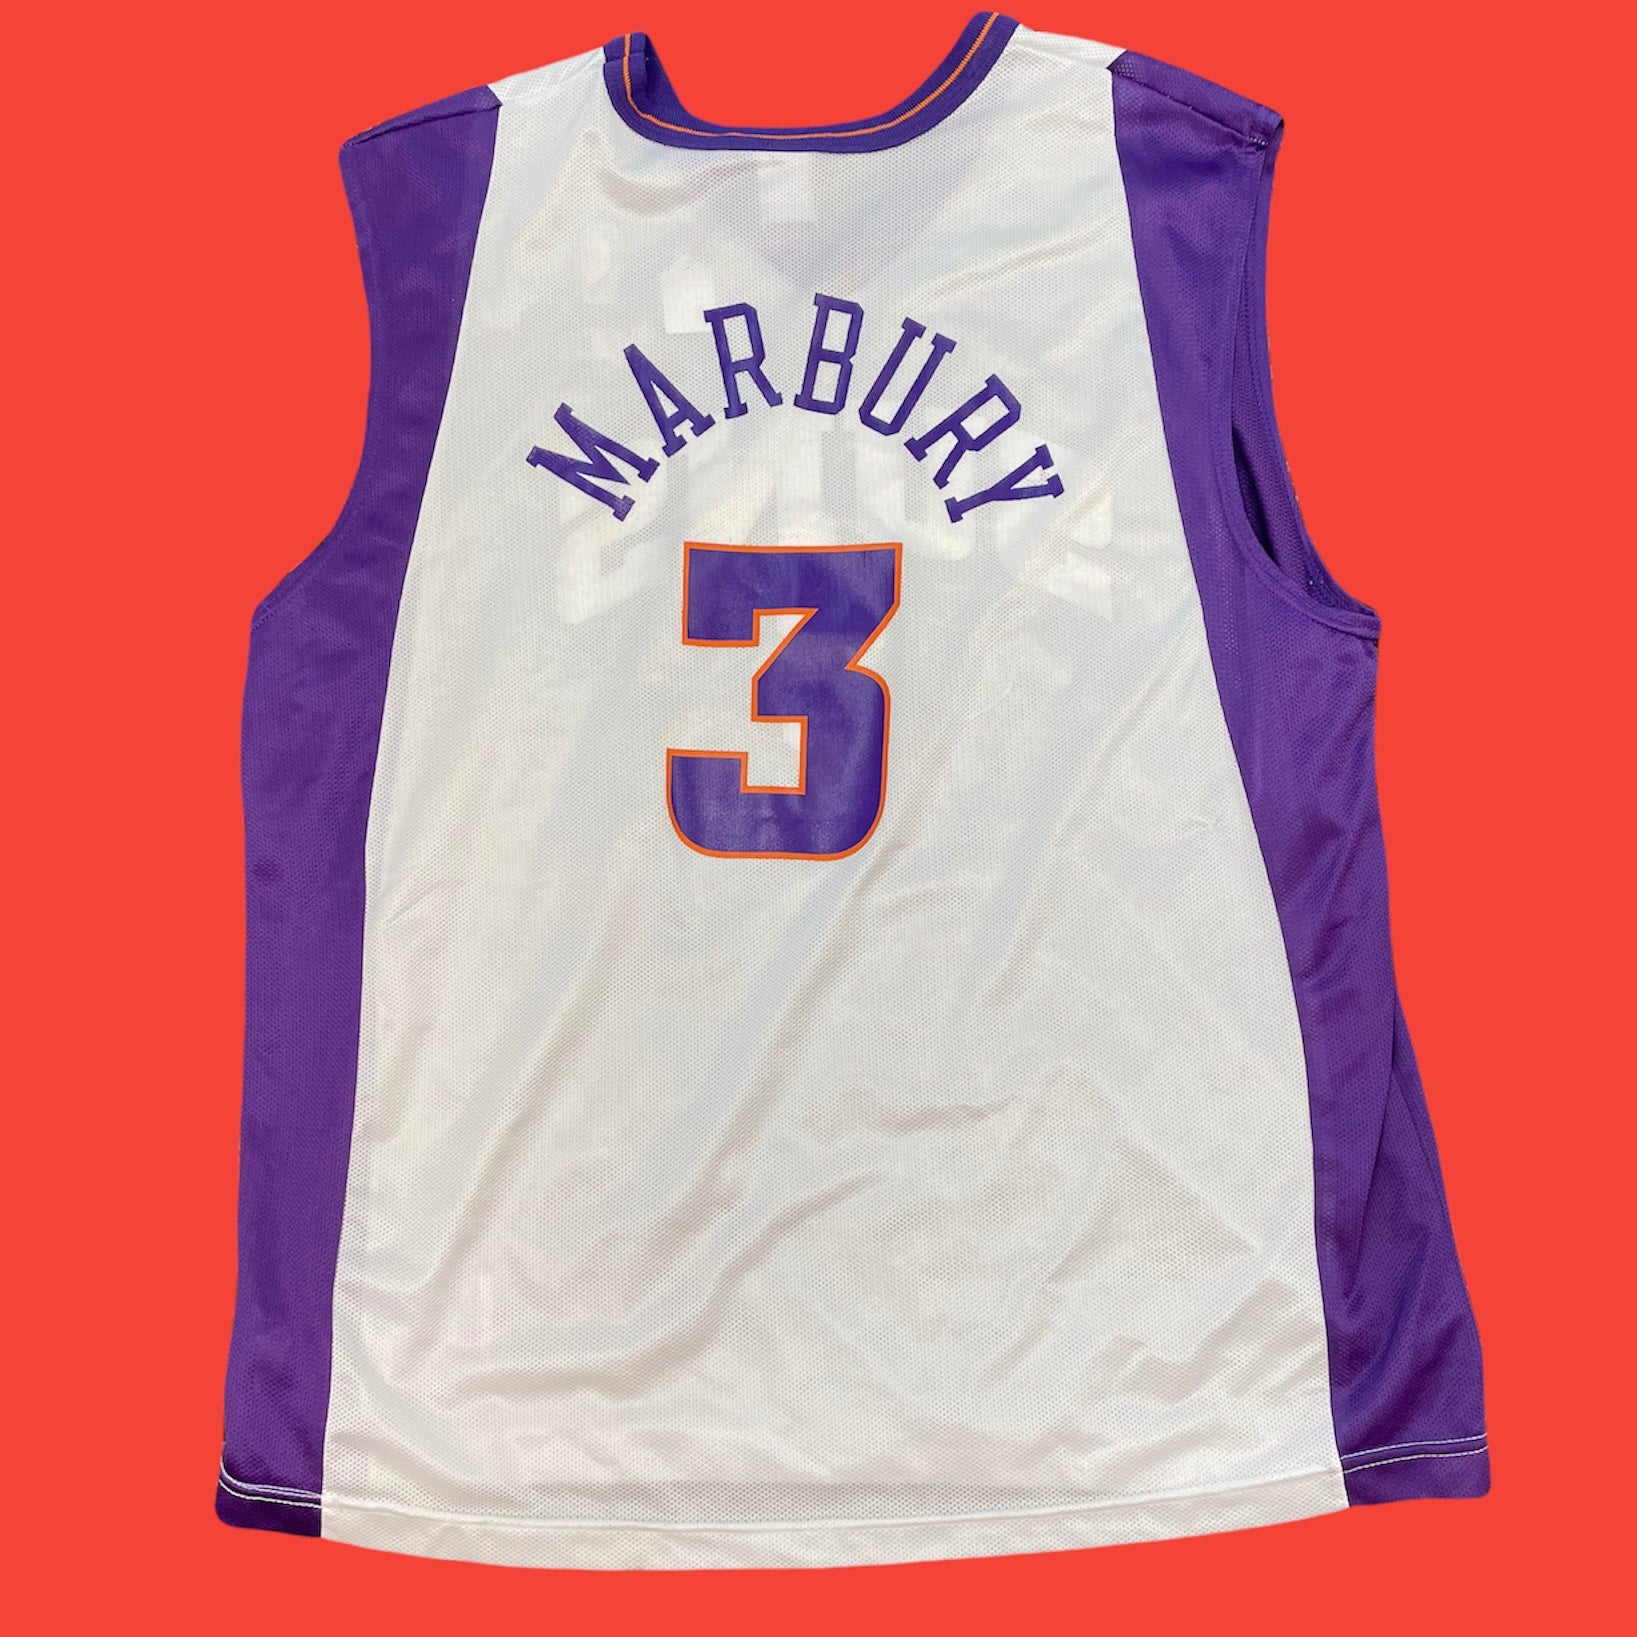 Marbury Suns Champion Jersey L